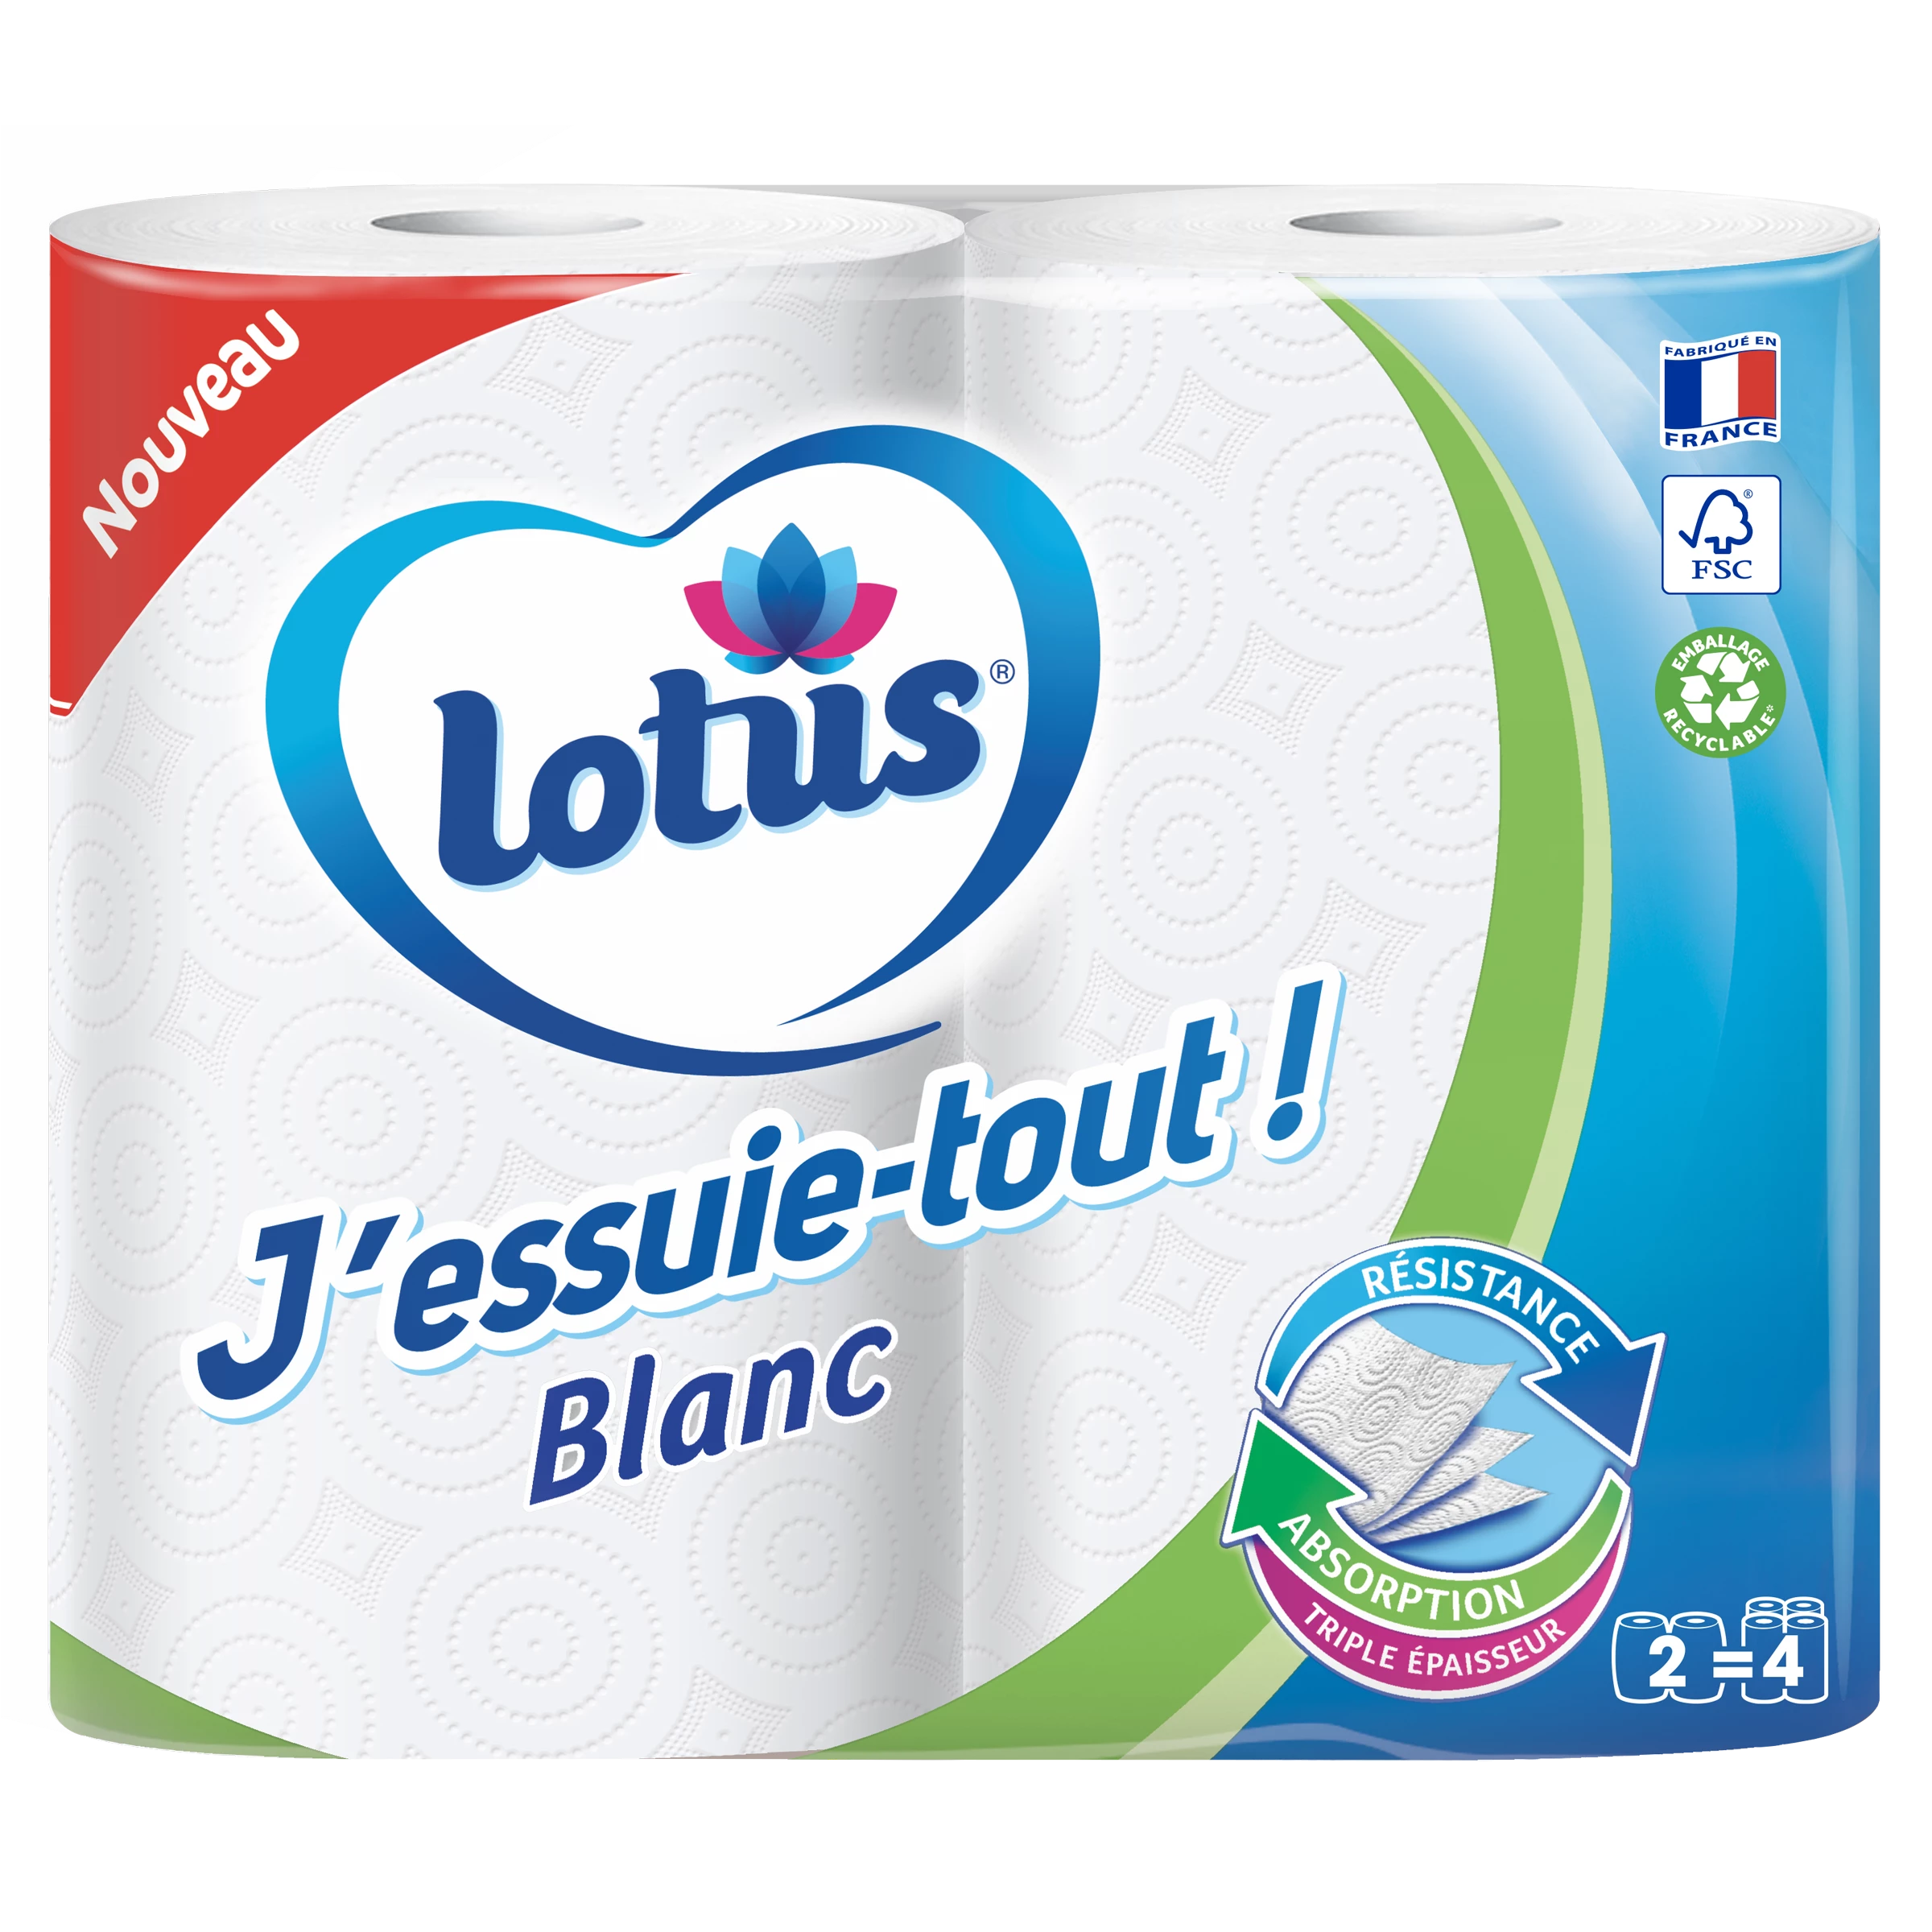 Lotus J Essuie-tout Blc 2 4 Rl